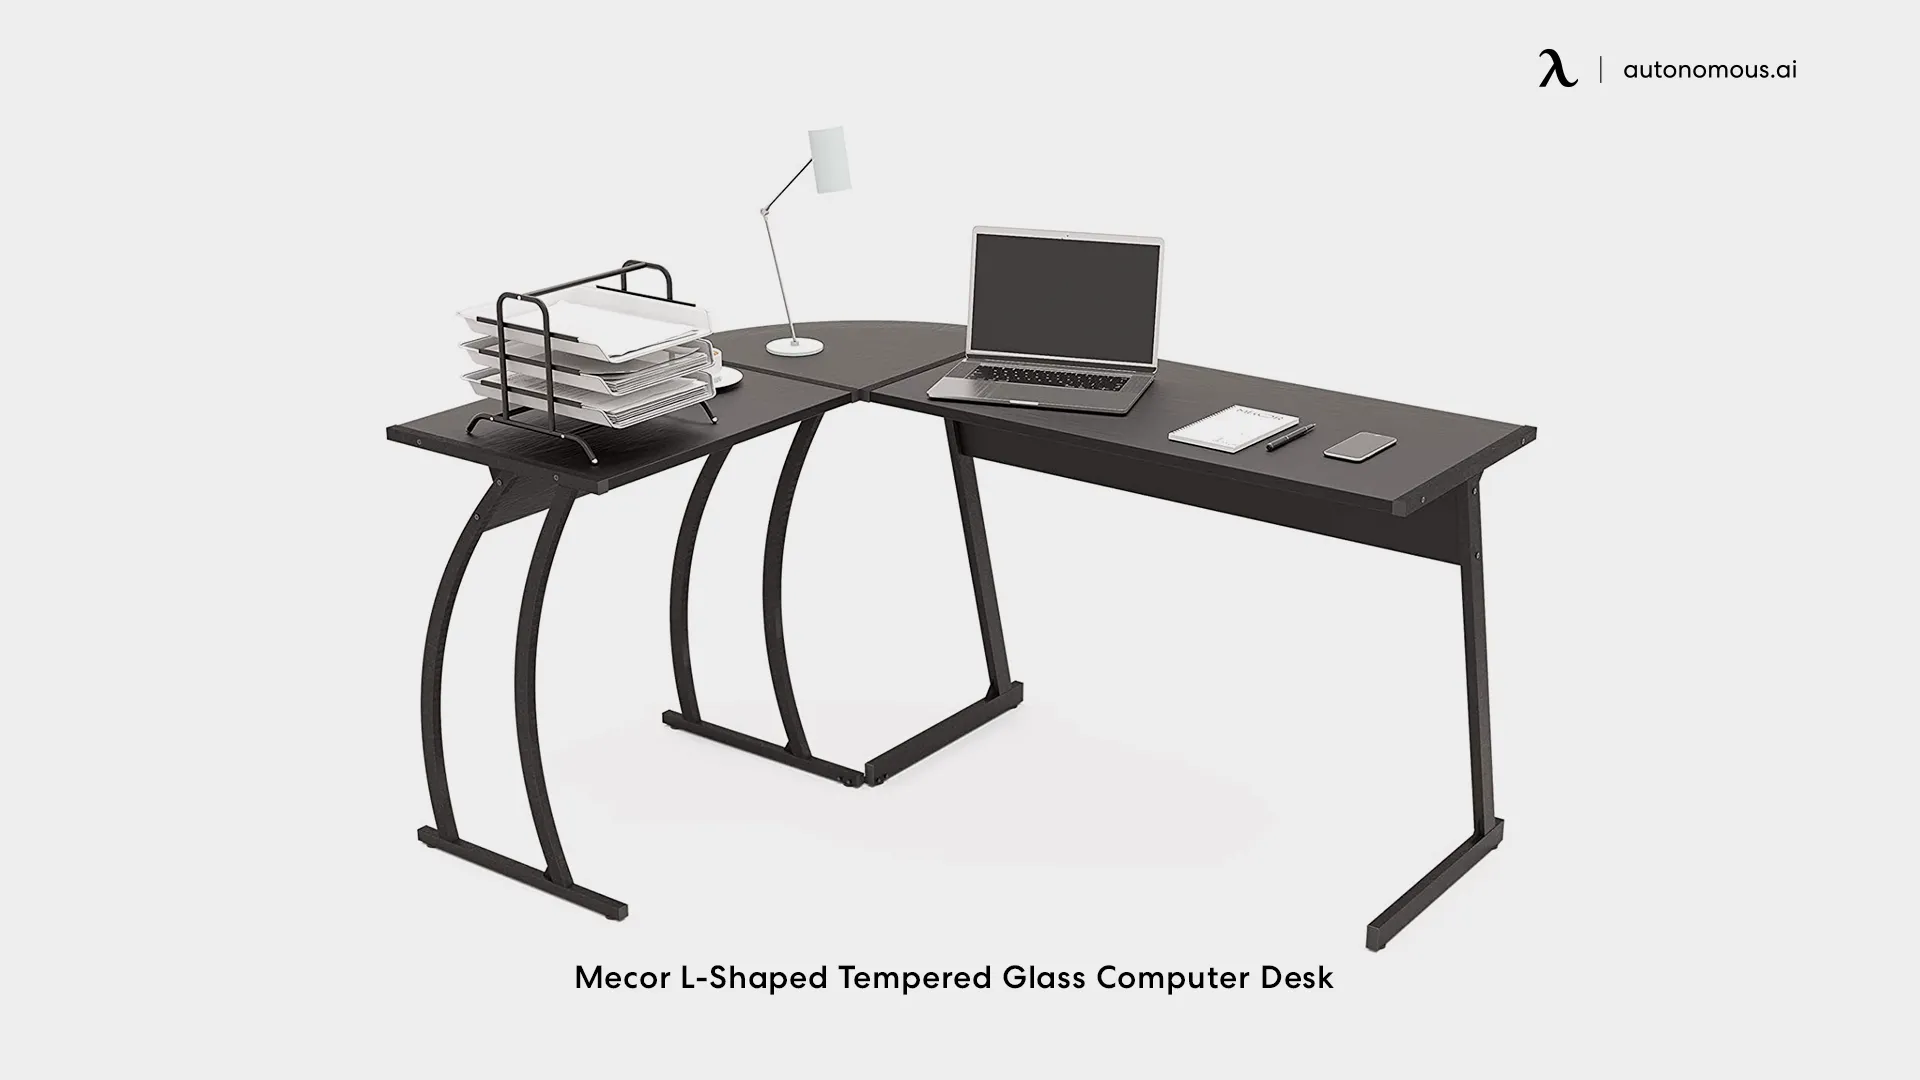 Mecor L-Shaped Tempered Glass Computer Desk